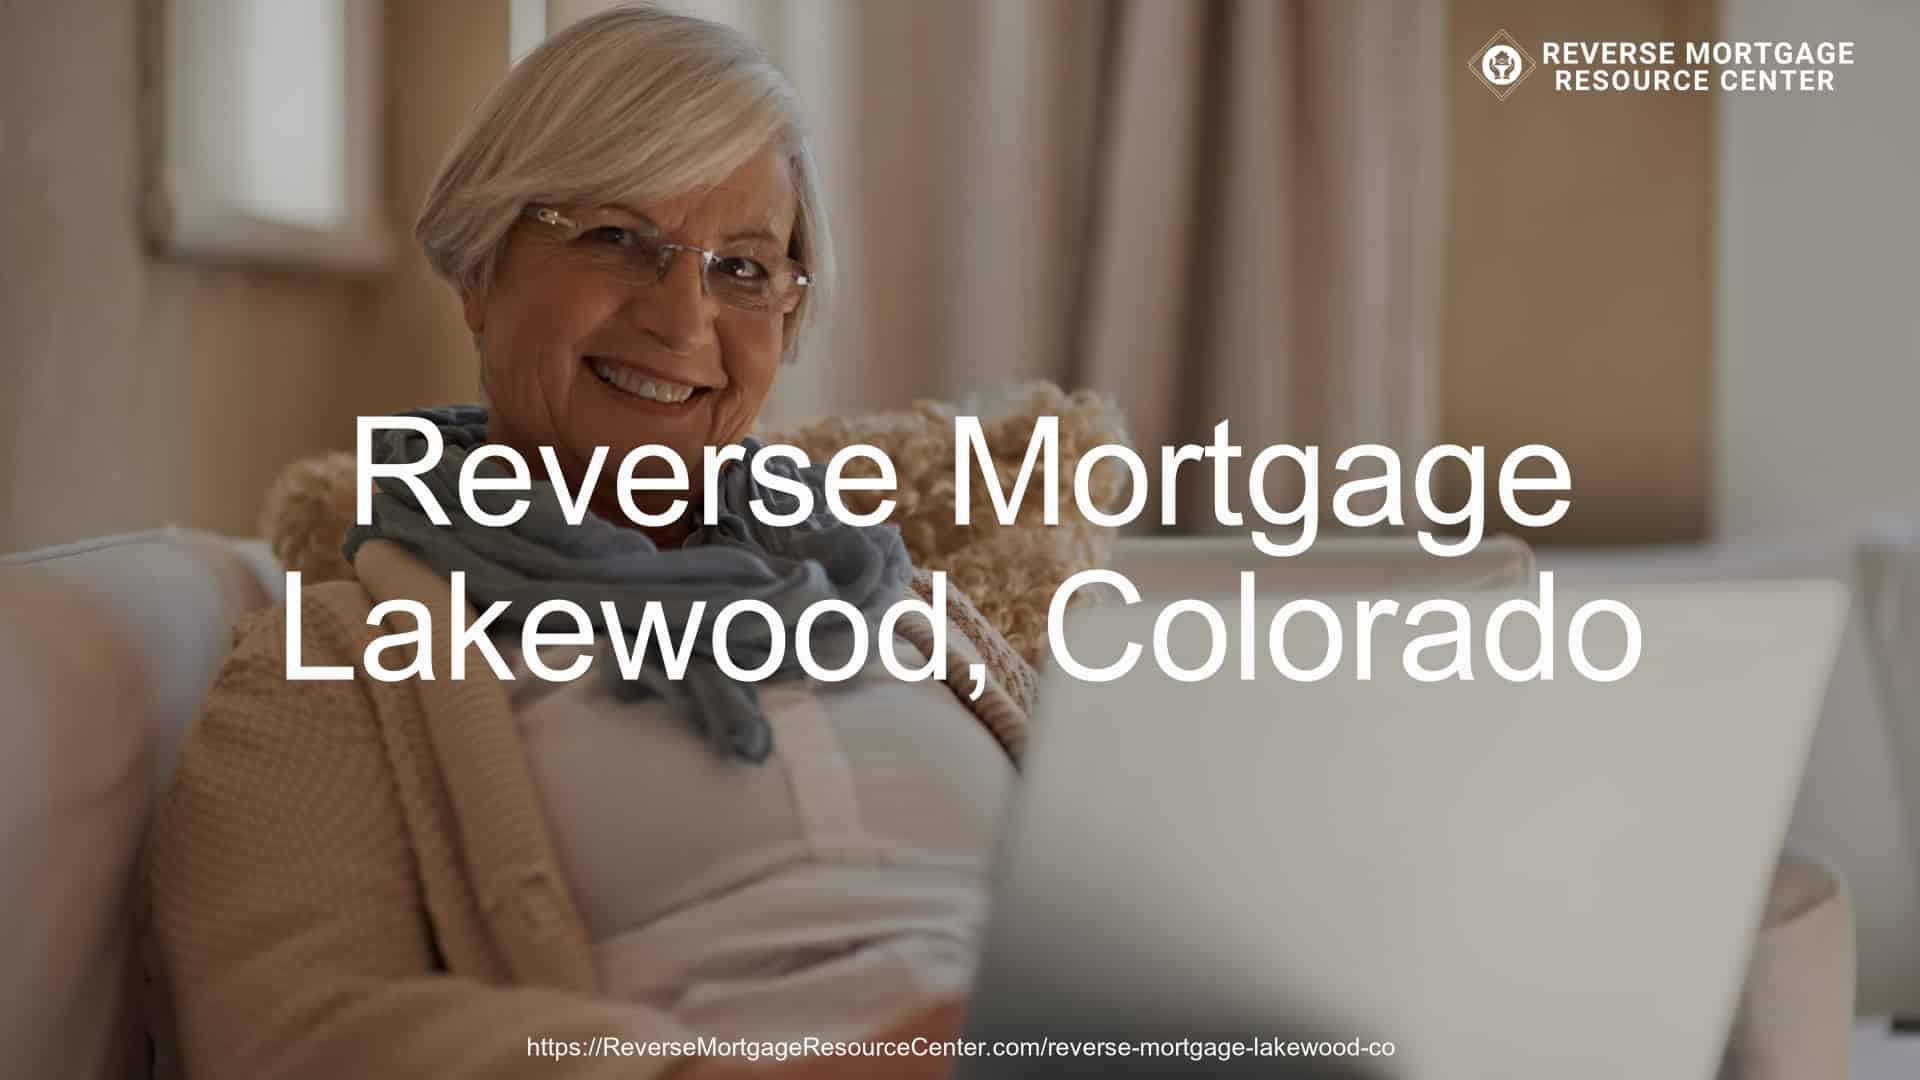 Reverse Mortgage Loans in Lakewood Colorado